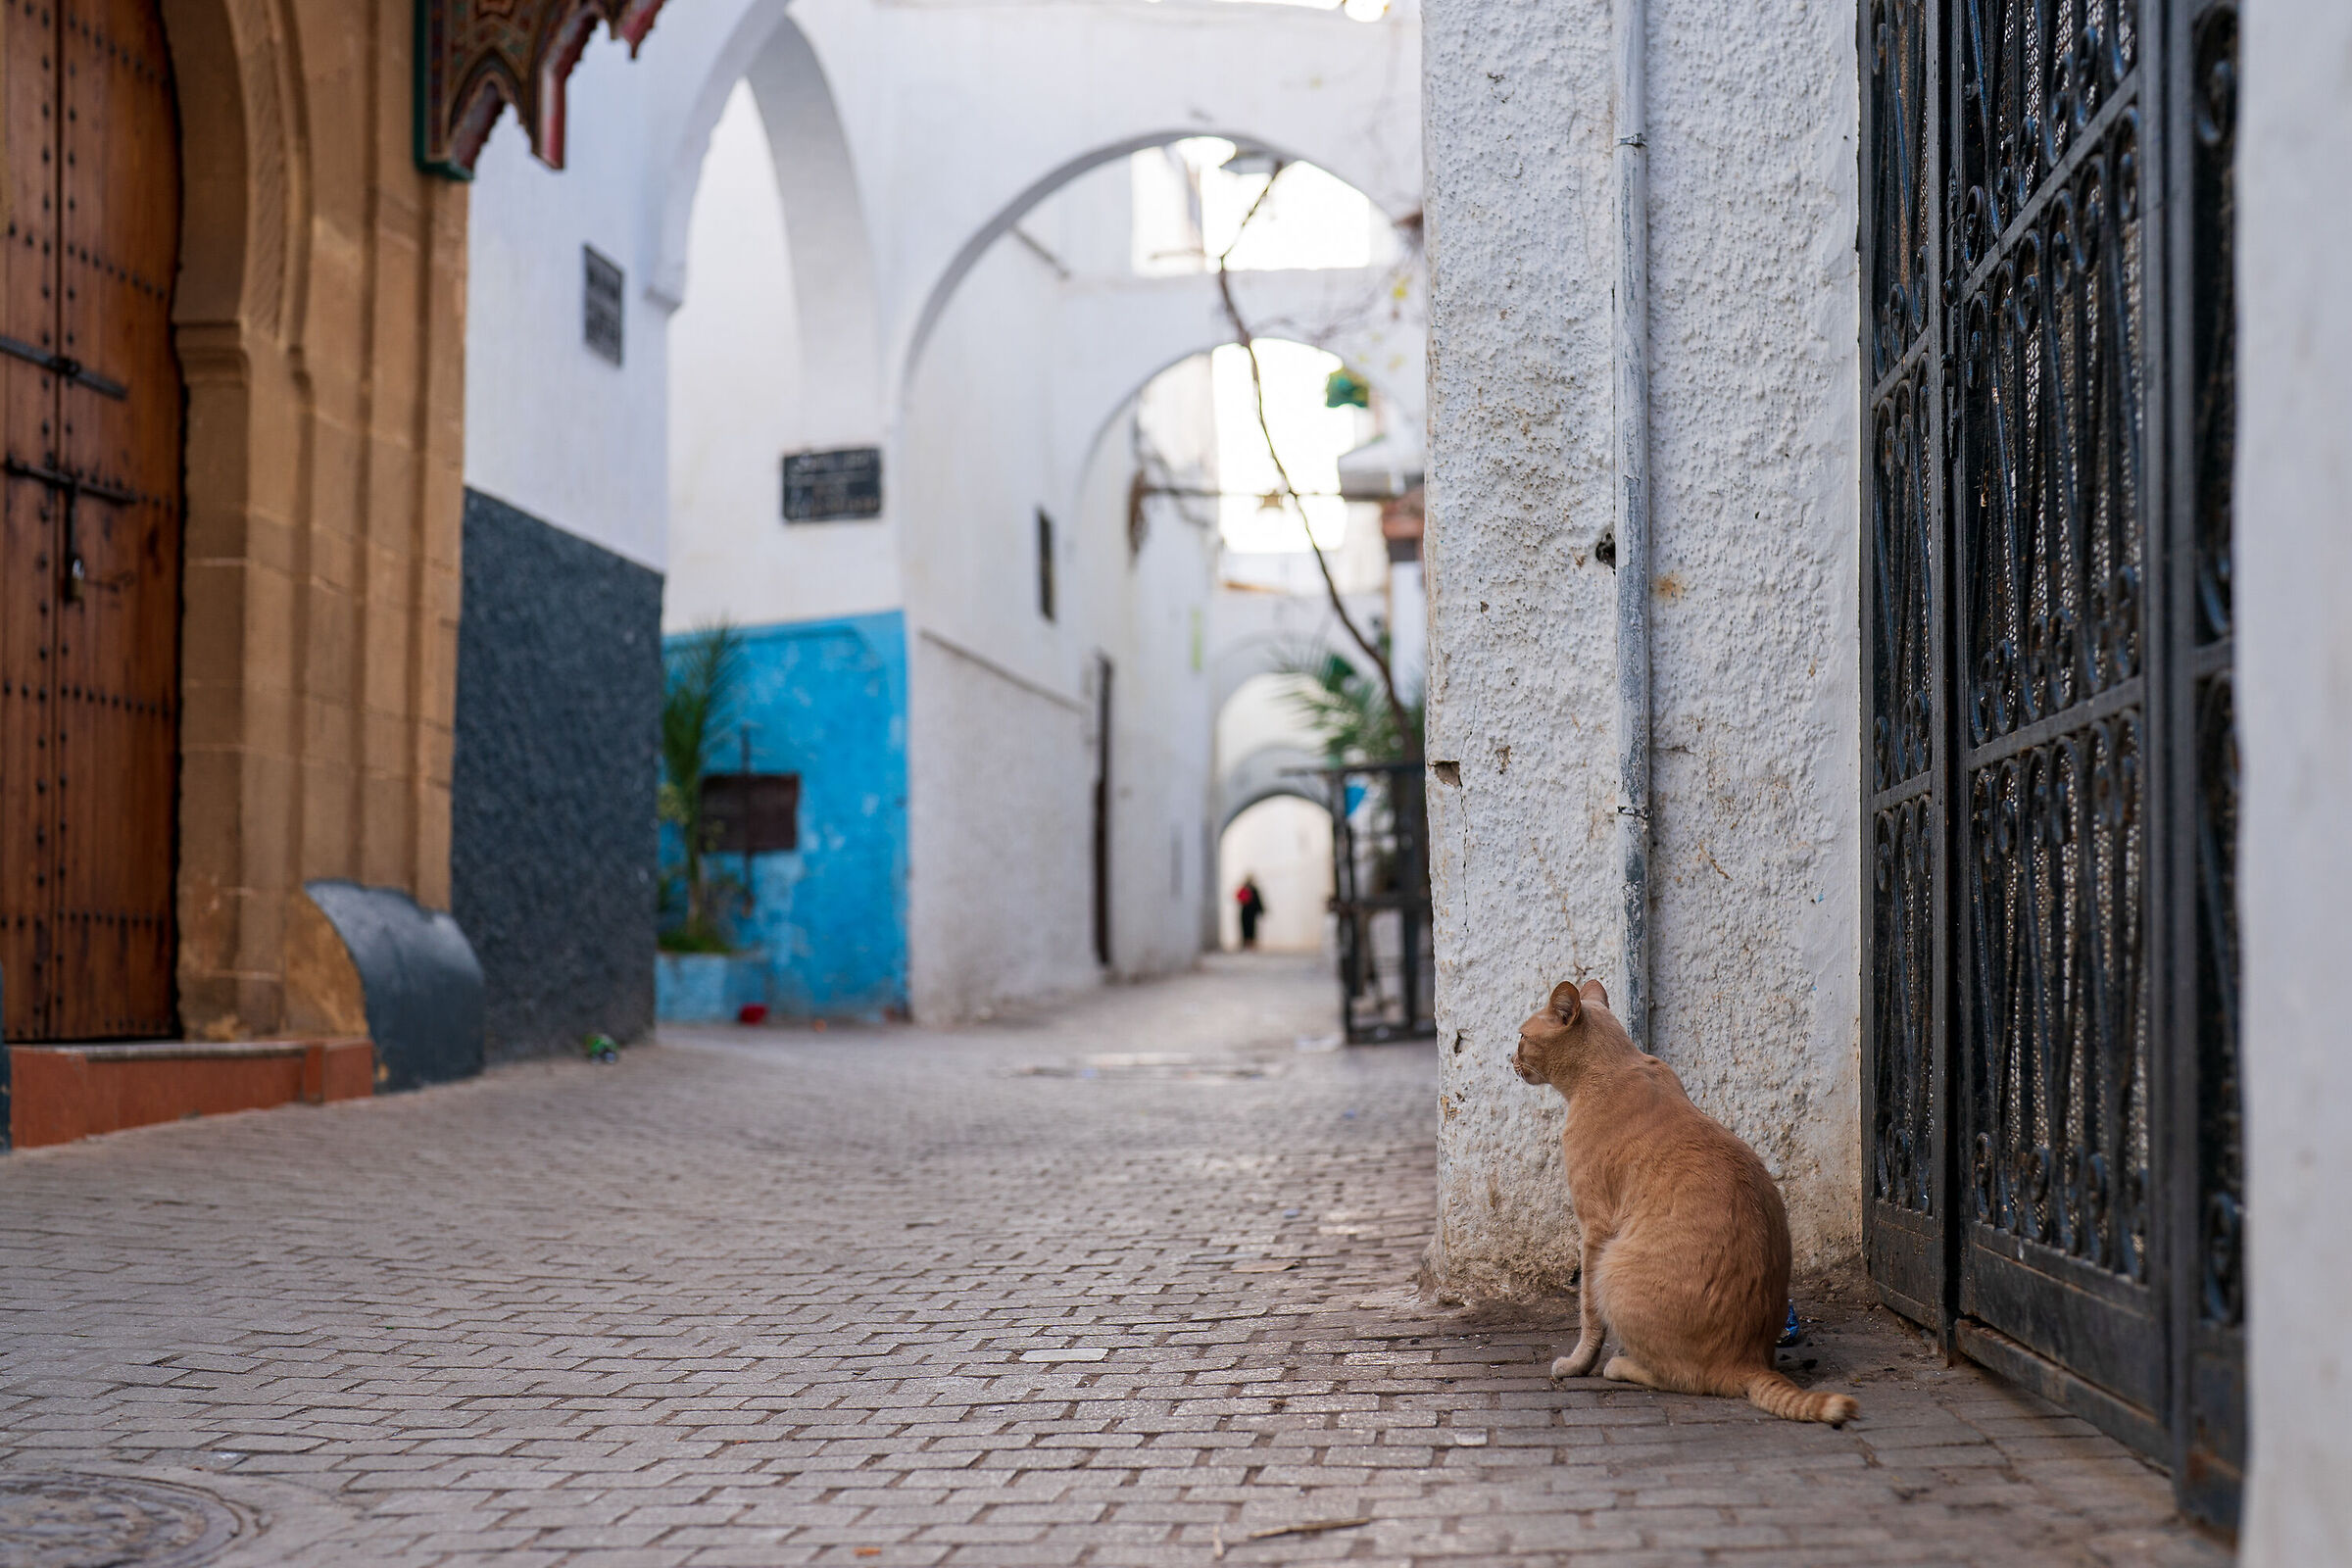 Cats of the Medina of Rabat (Morocco)...